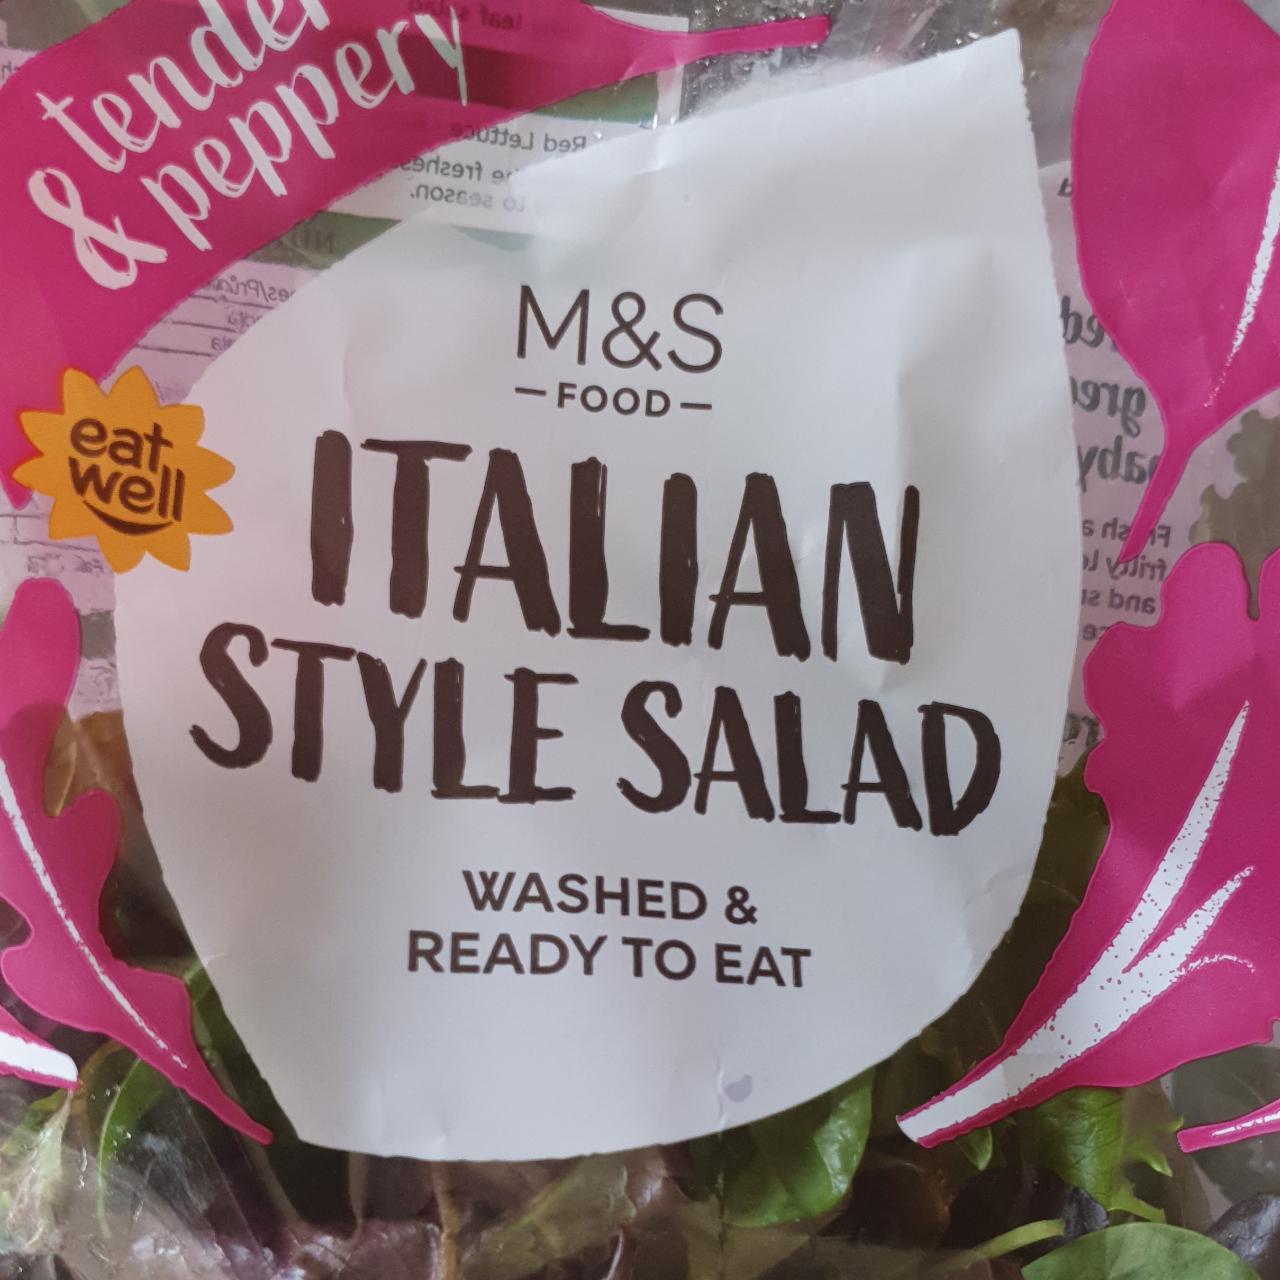 Fotografie - Italian style salad M&S Food